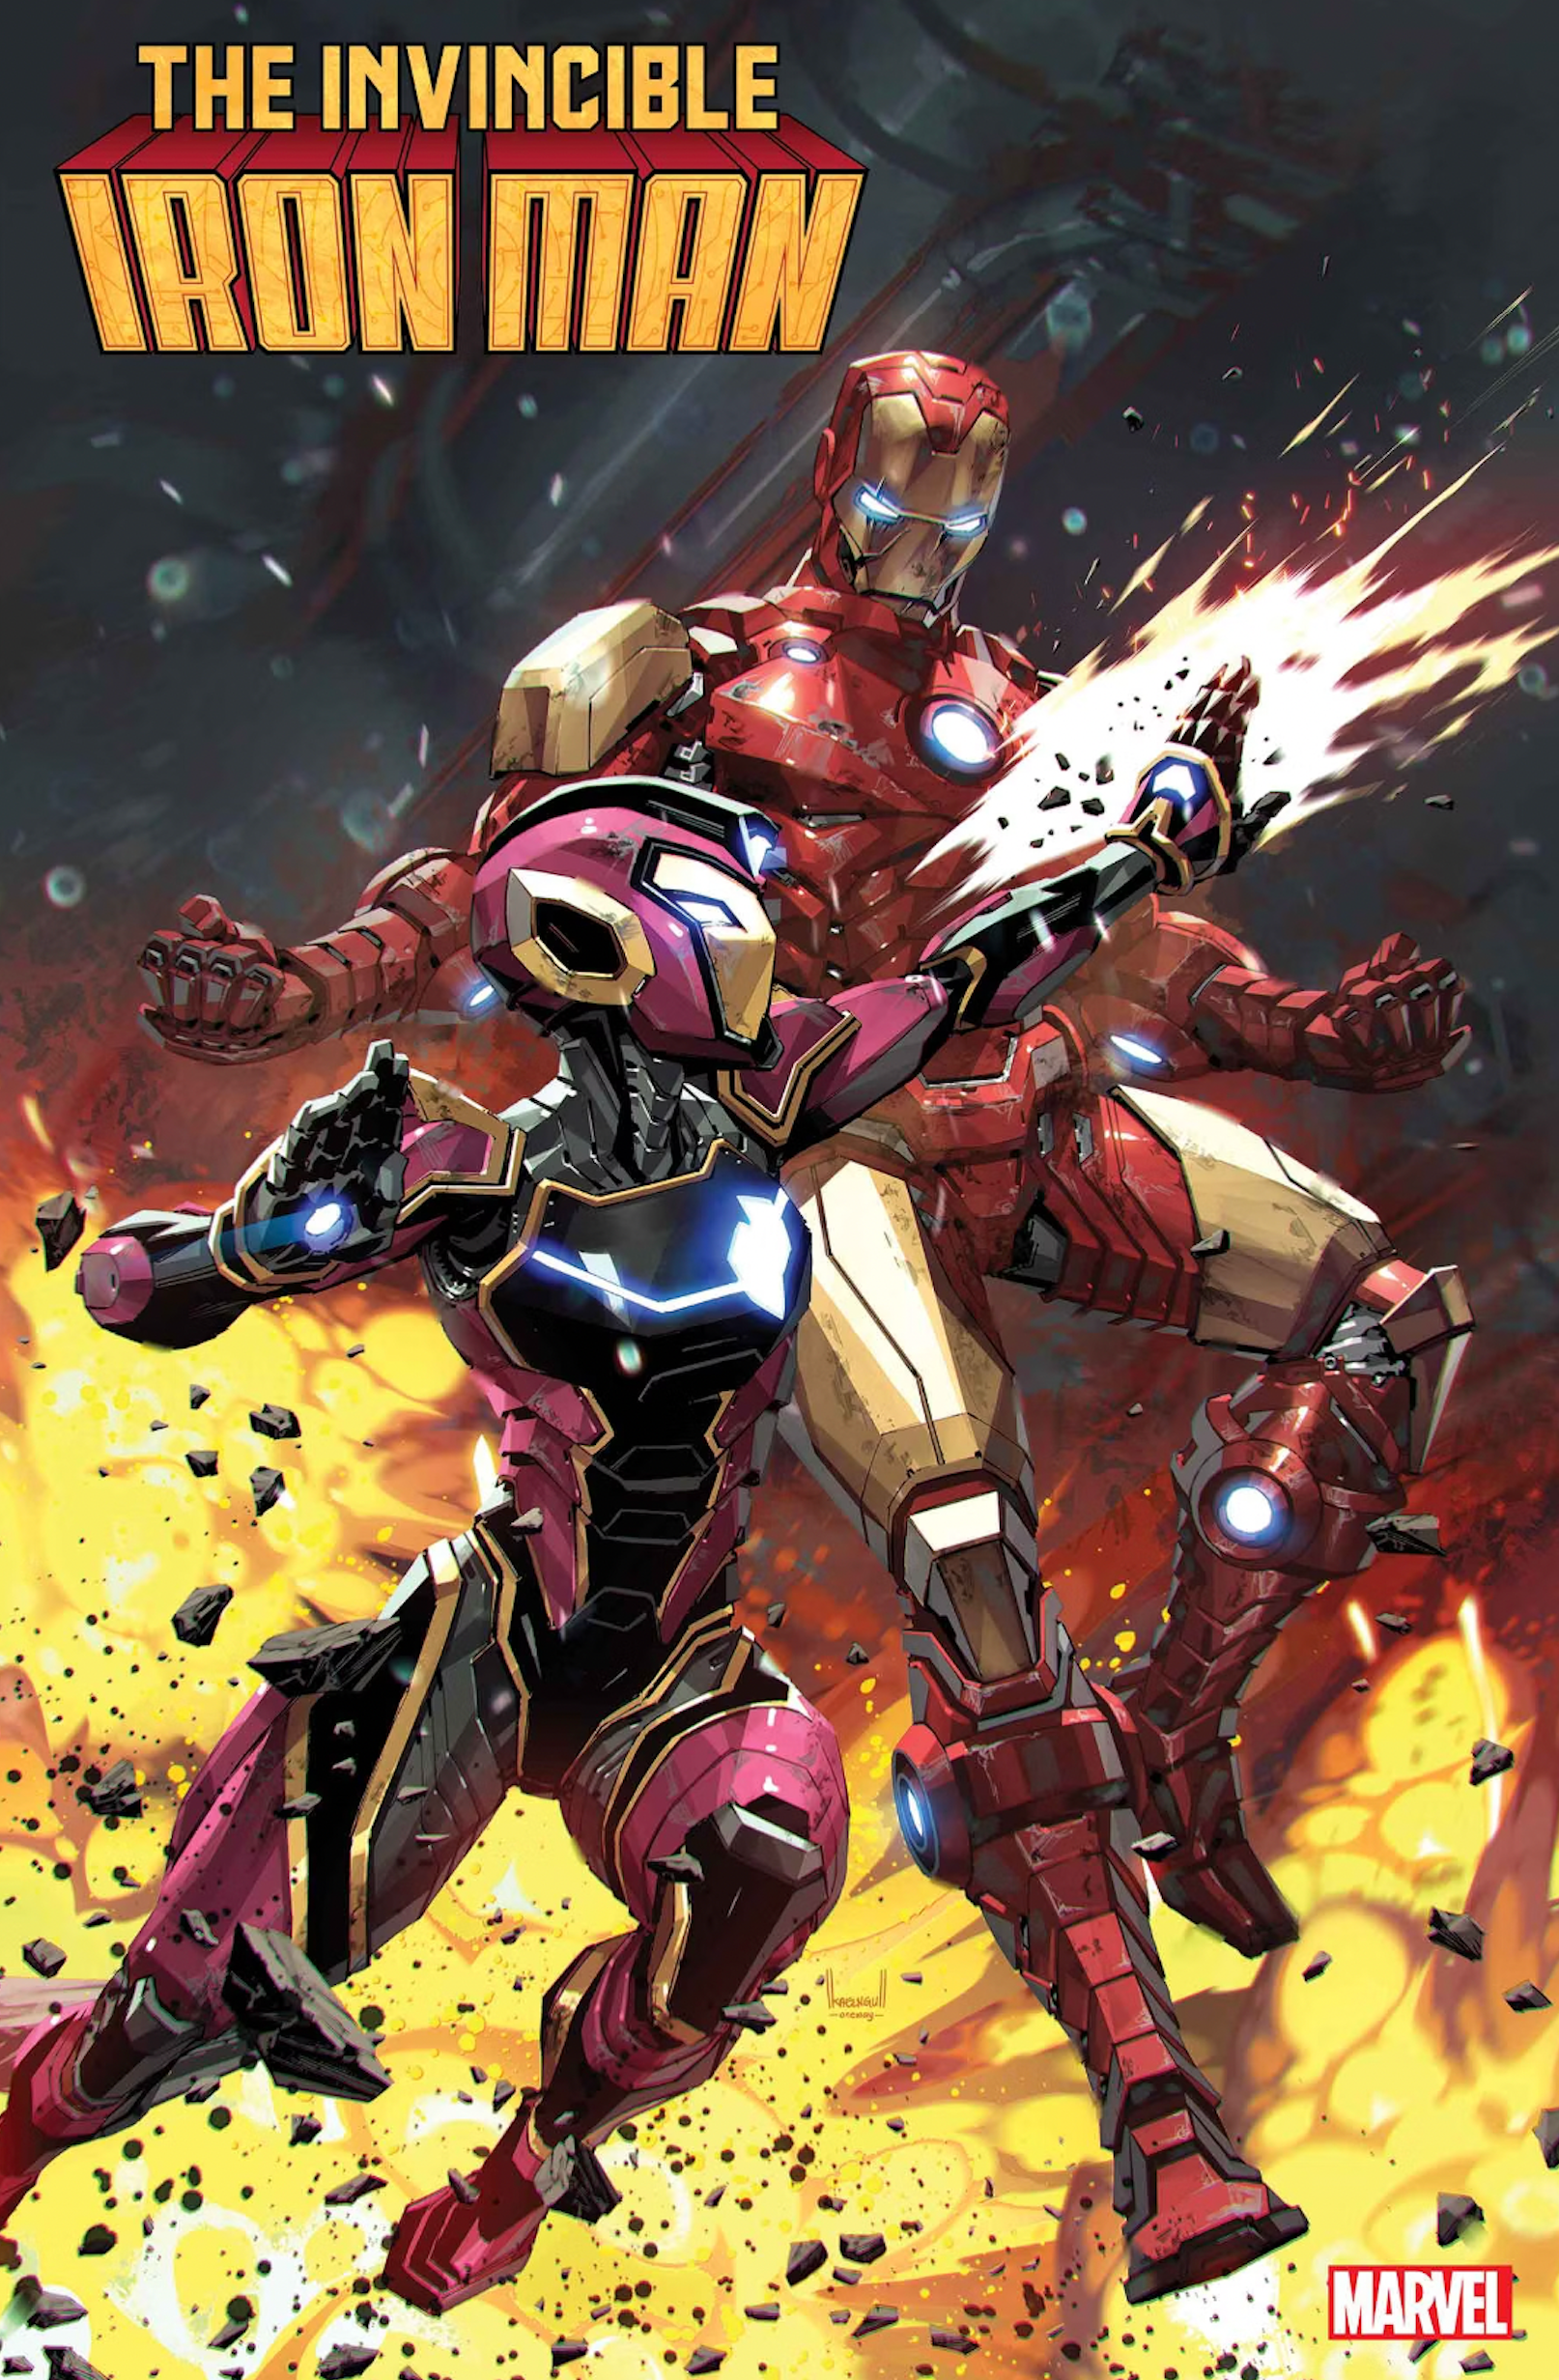 Iron Man and Ironheart fight